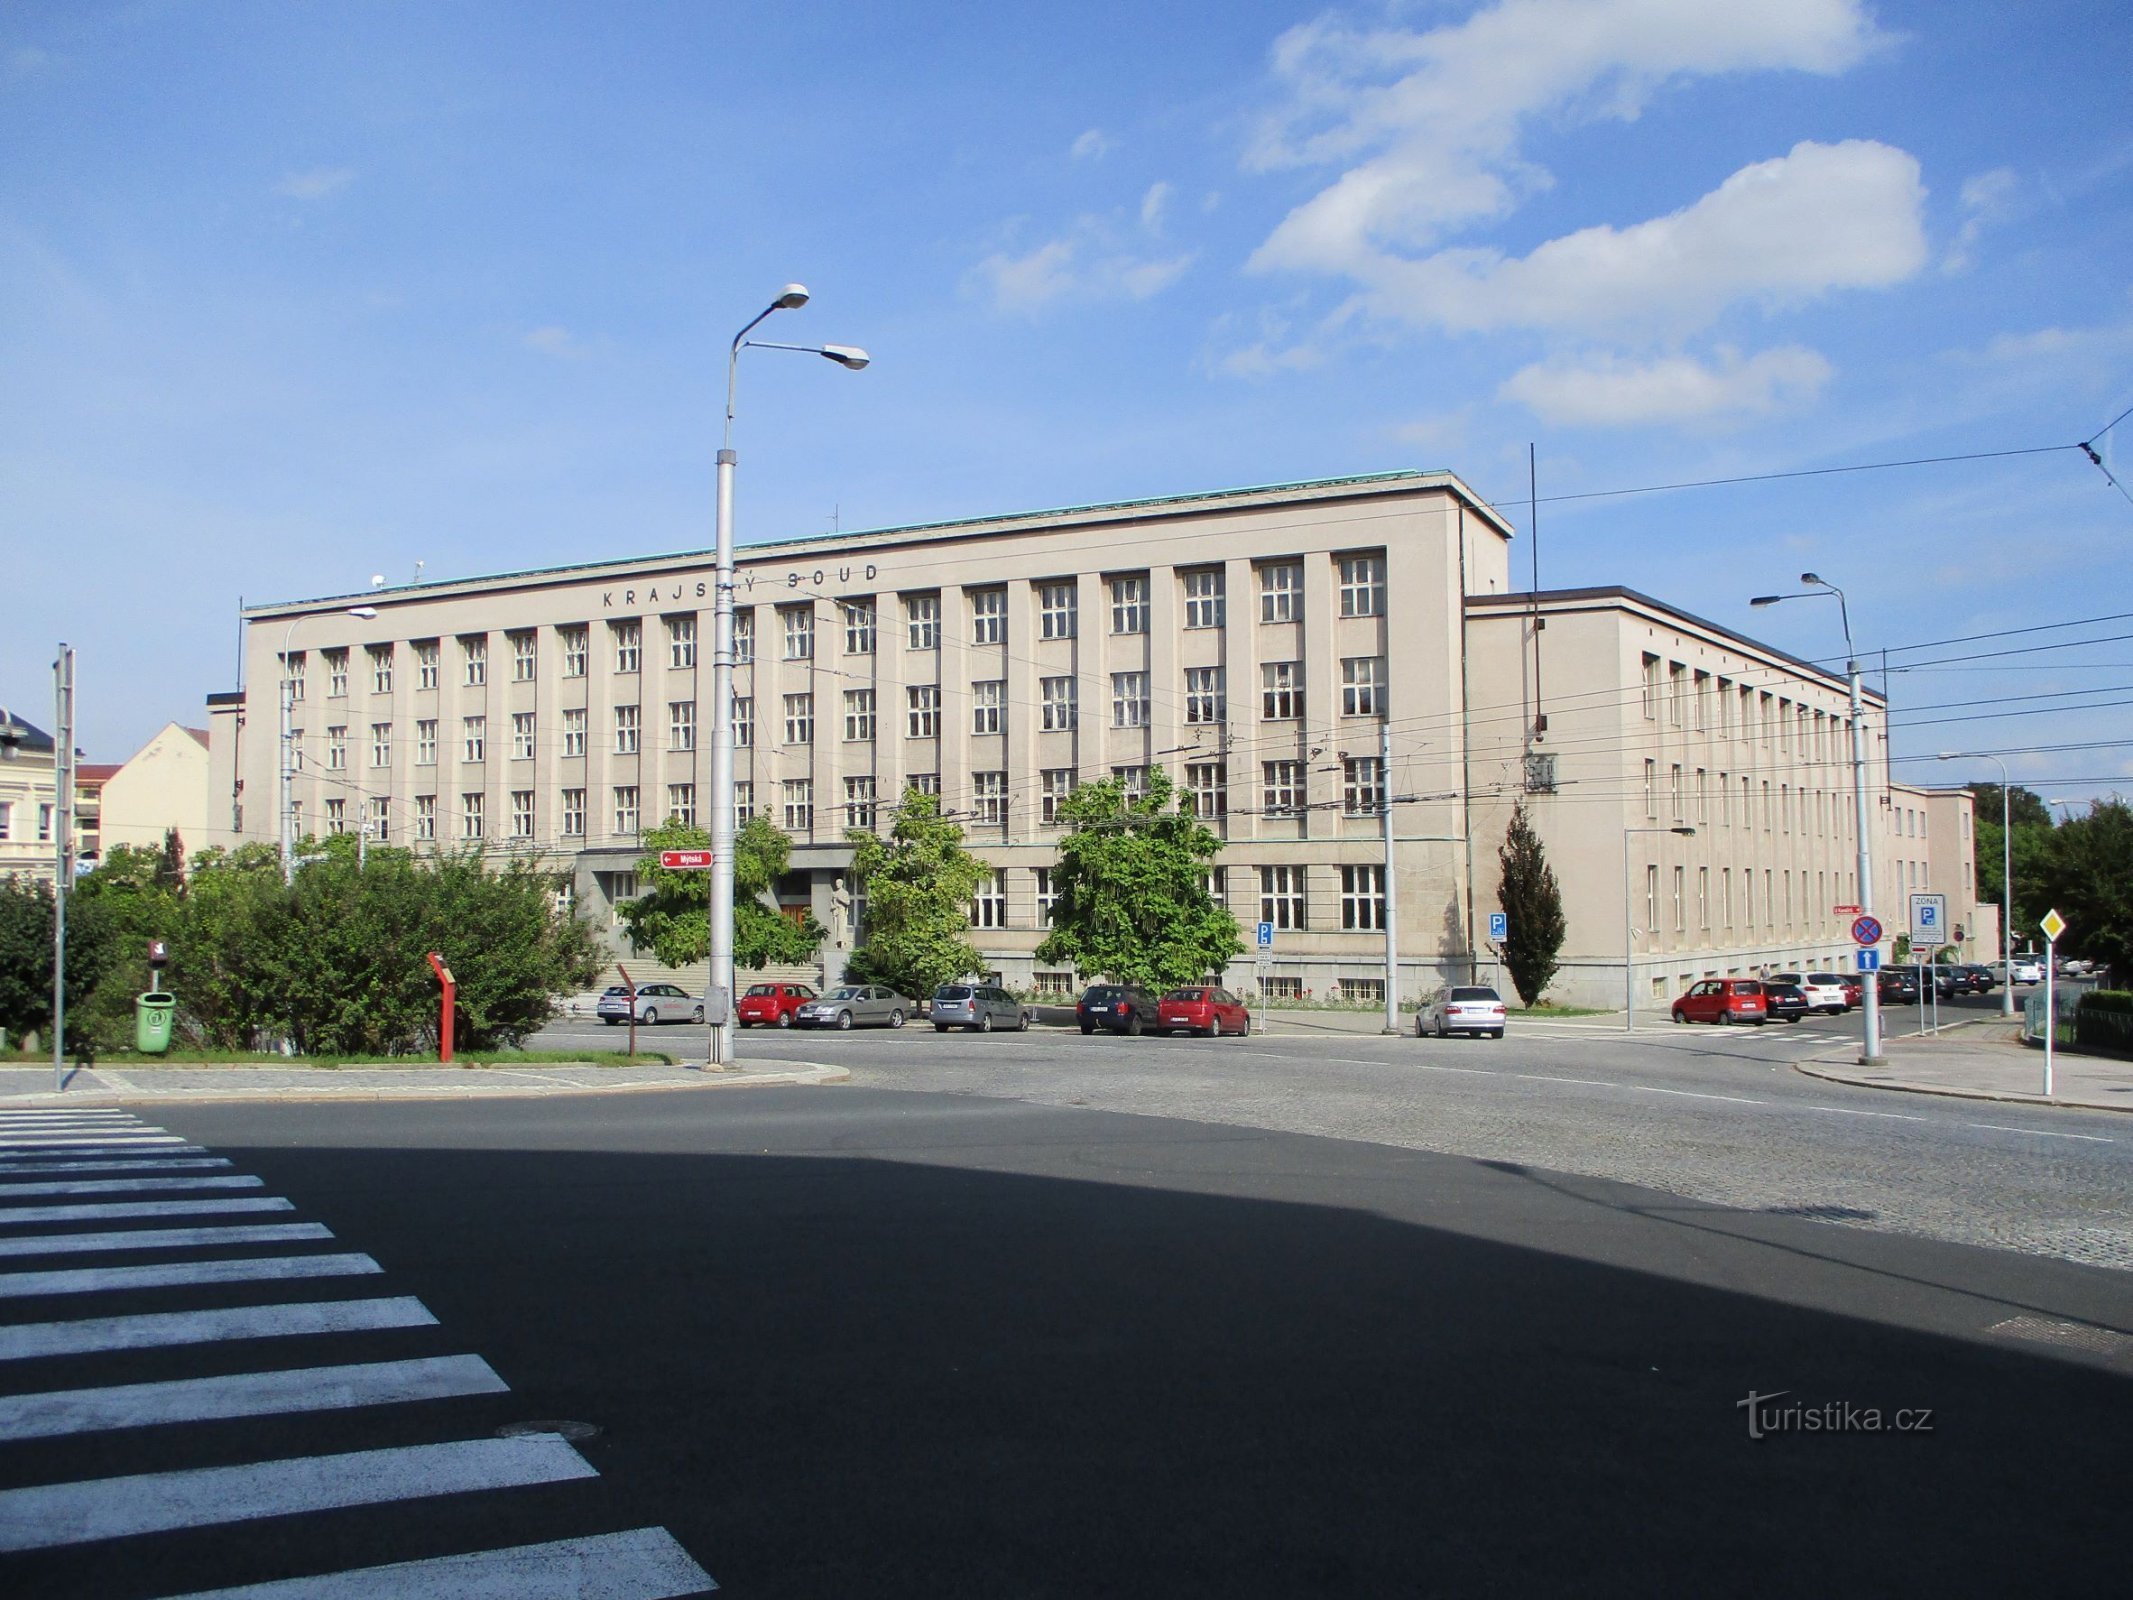 Regional Court in Hradec Králové (September 15.9.2019, XNUMX)